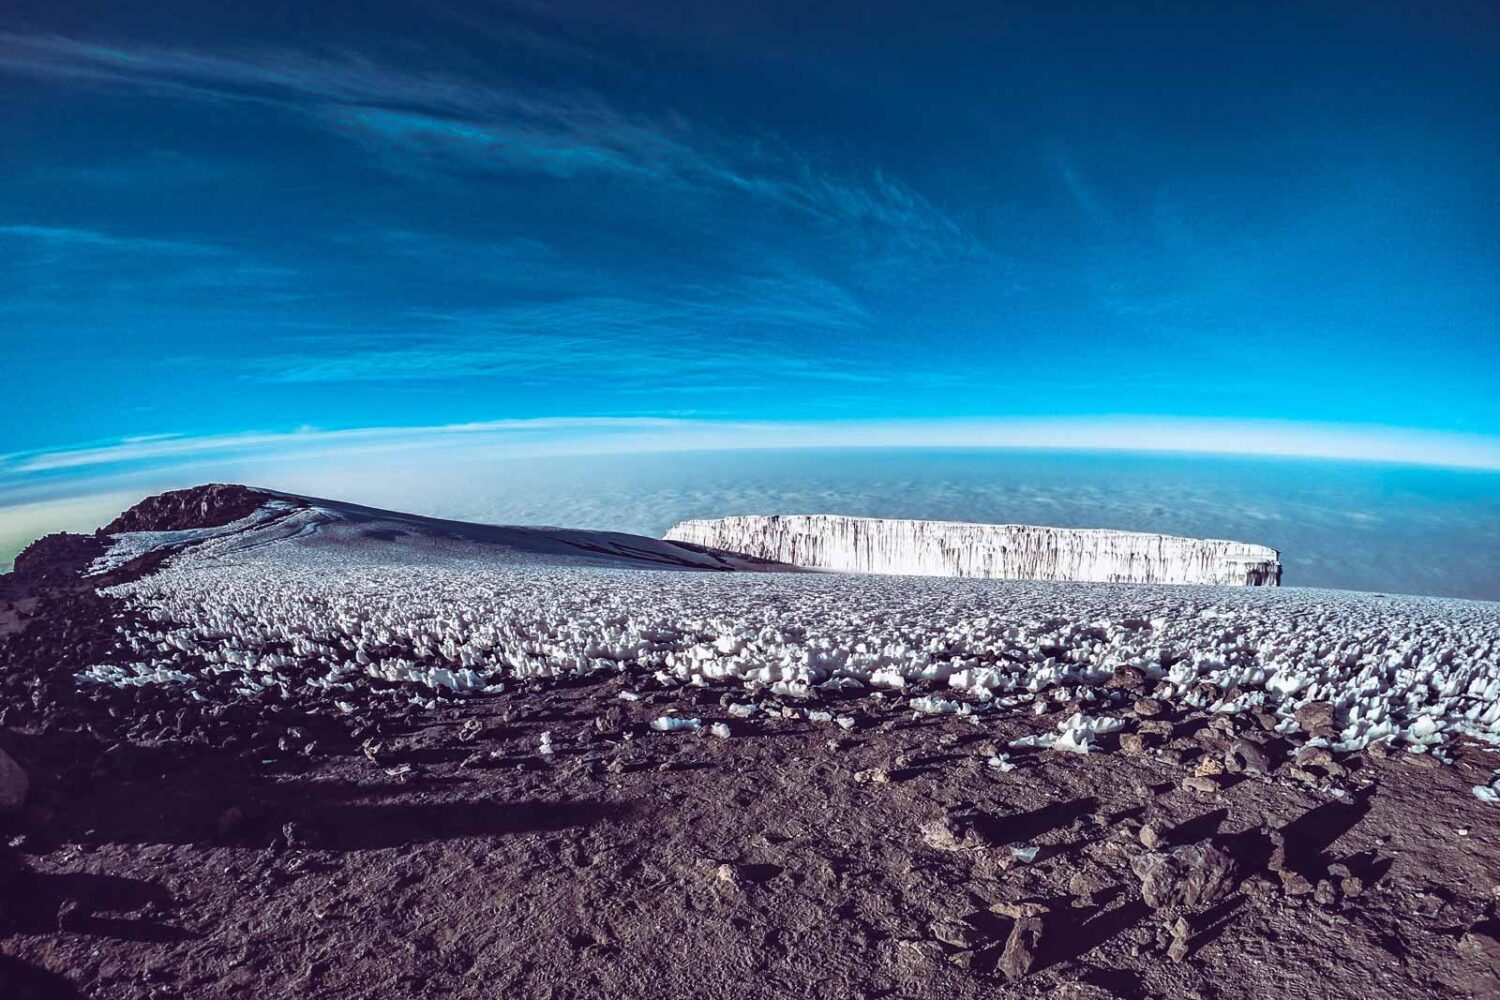 Hike Mt. Kilimanjaro in Africa